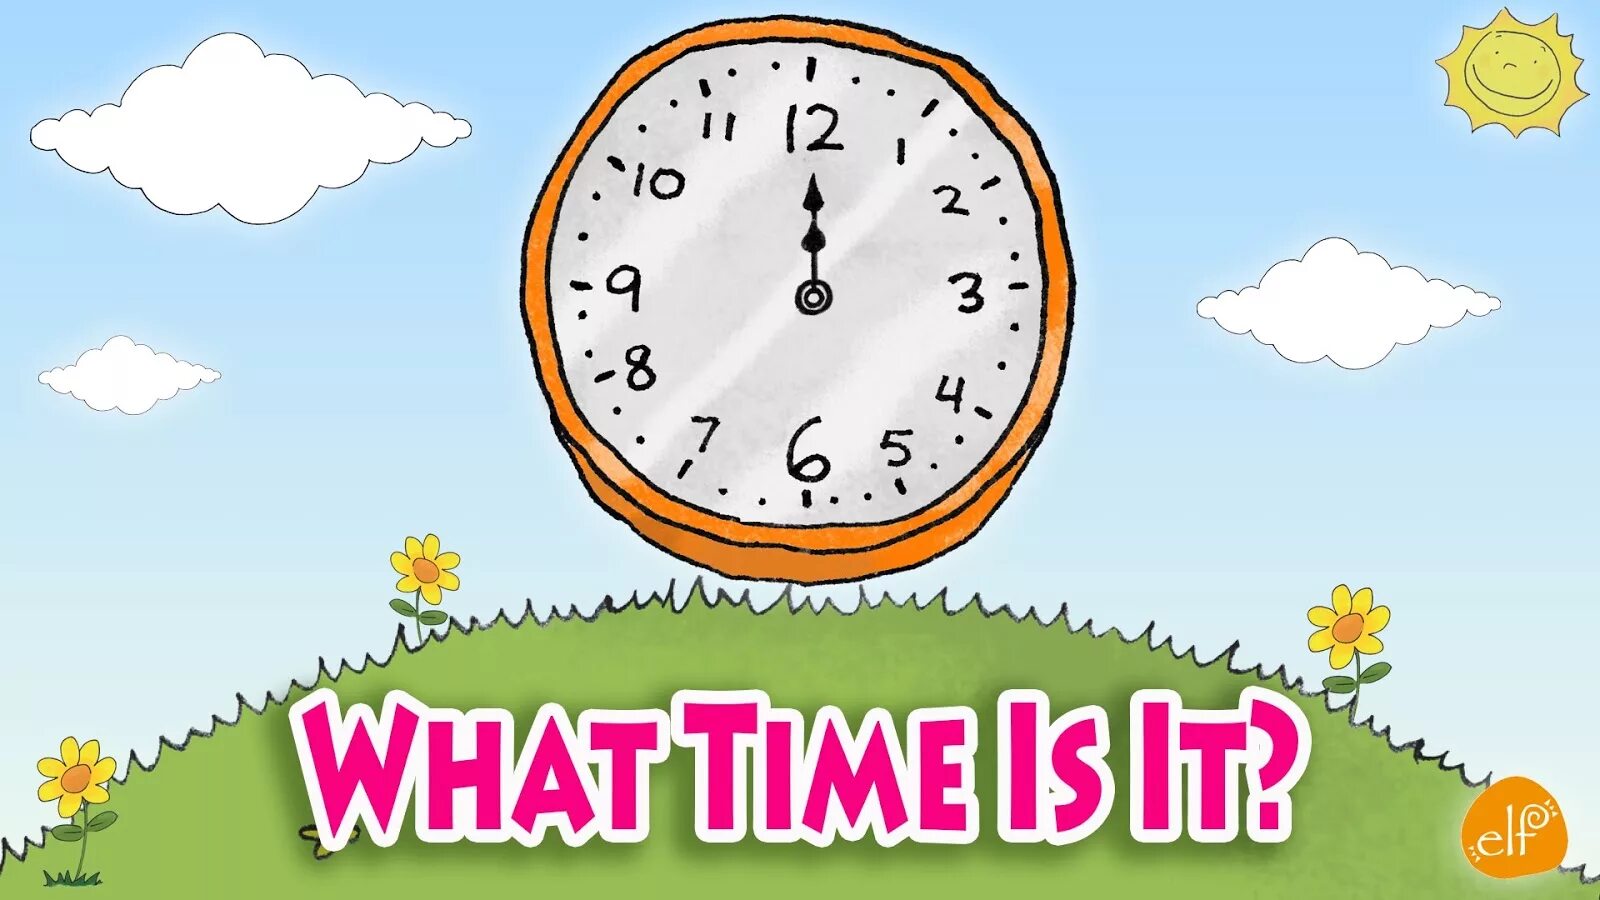 L am on time. What the time для детей. What time is it для детей. What time is it картинка. Часы картинка для детей.